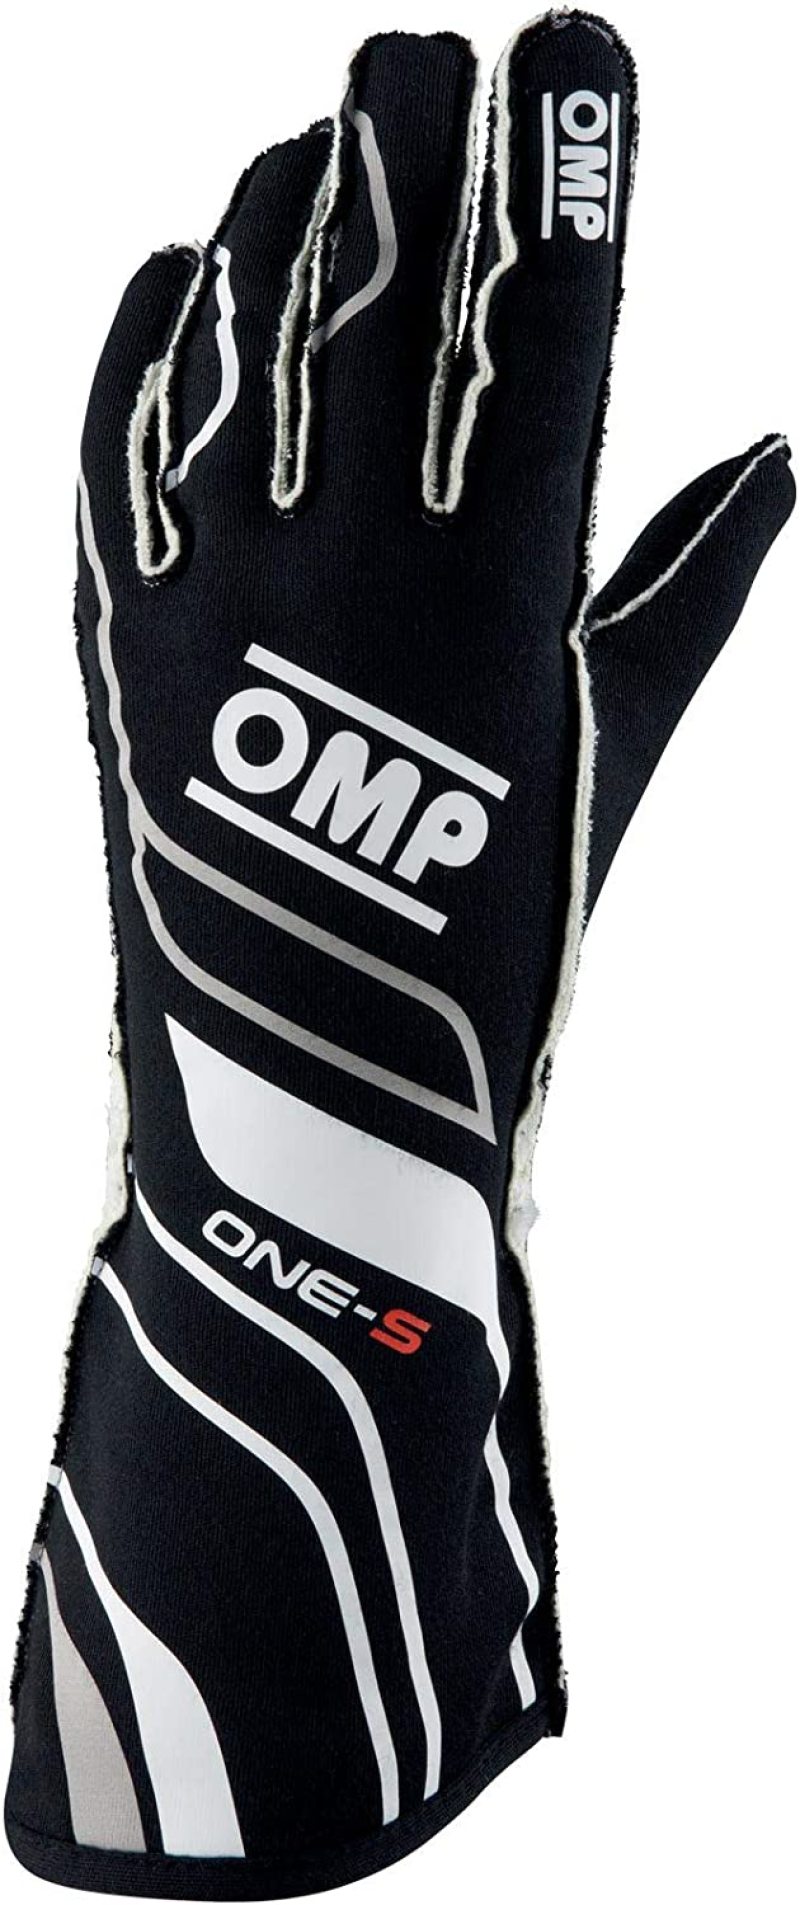 OMP One-S Gloves Black - Size M Fia 8556-2018 - IB0-0770-A01-071-M